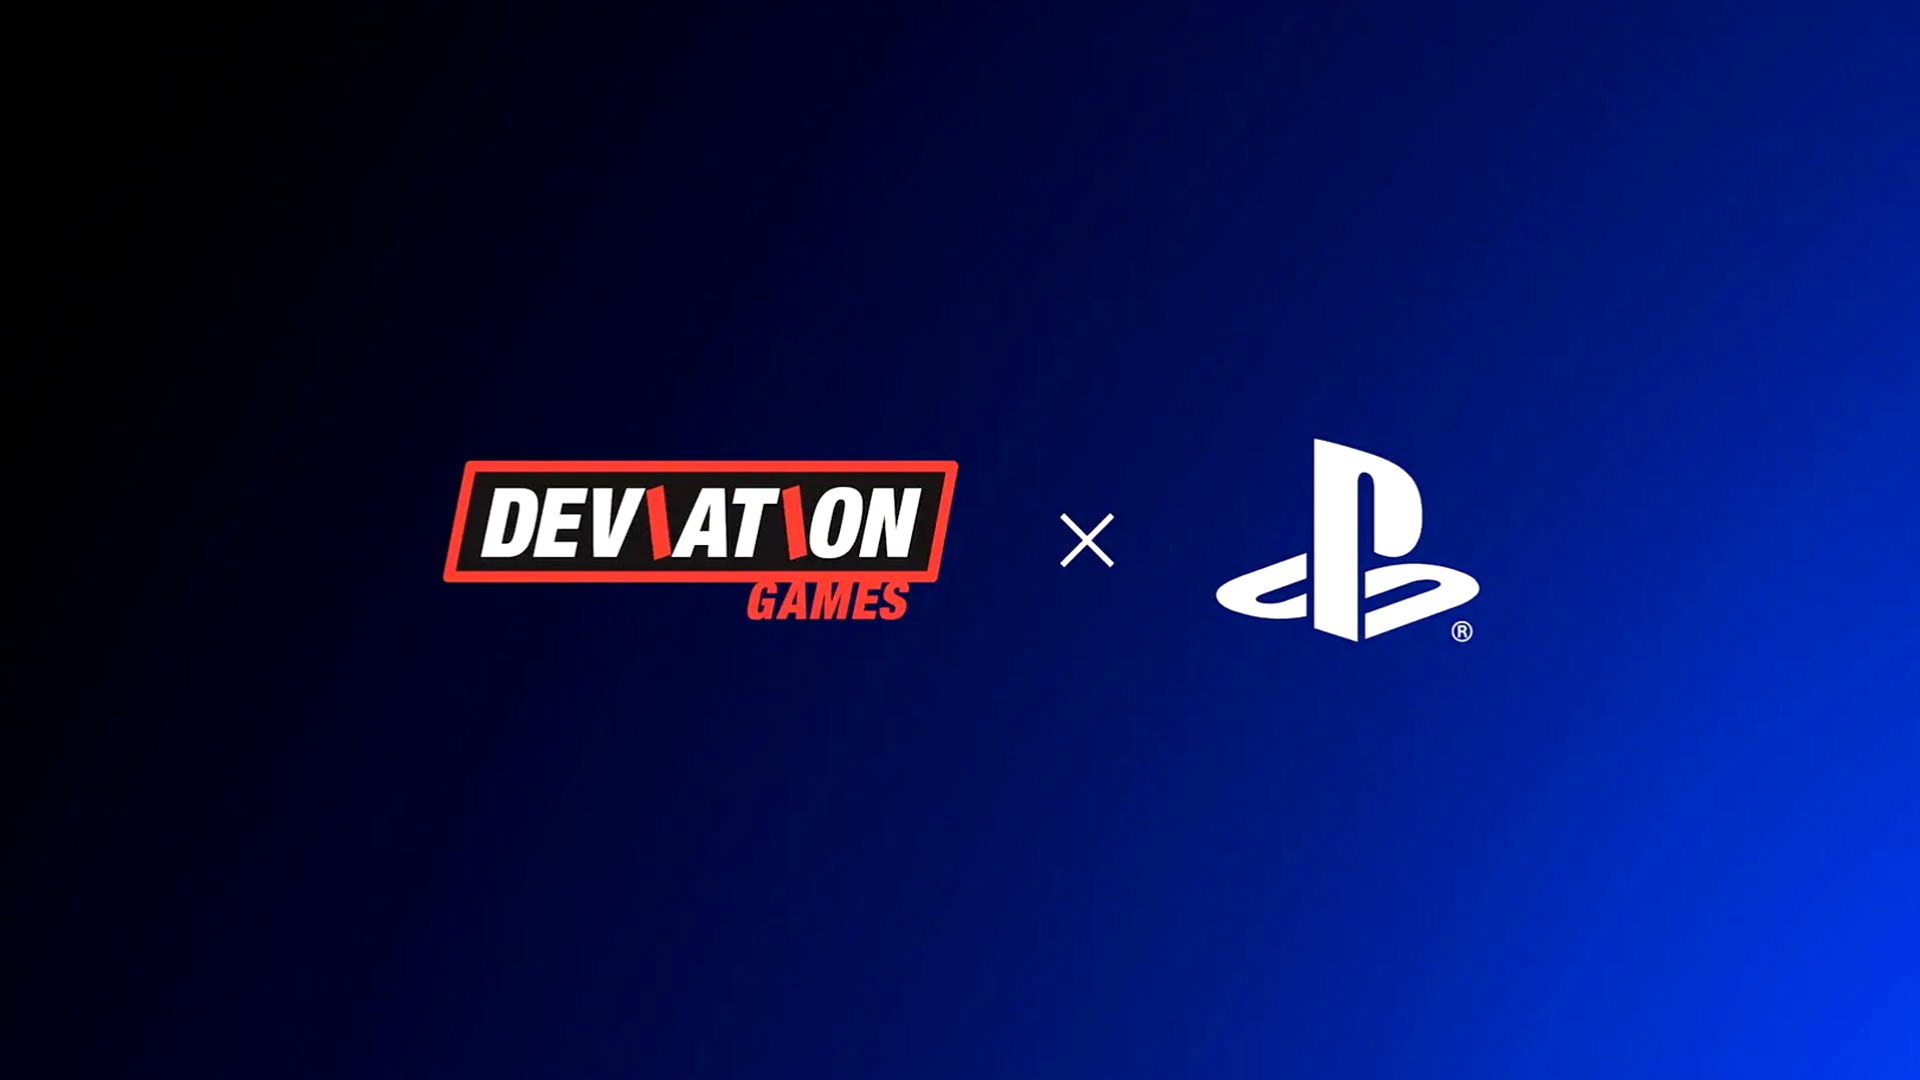 Deviation Games cierra a pesar del respaldo de PlayStation que prometía 